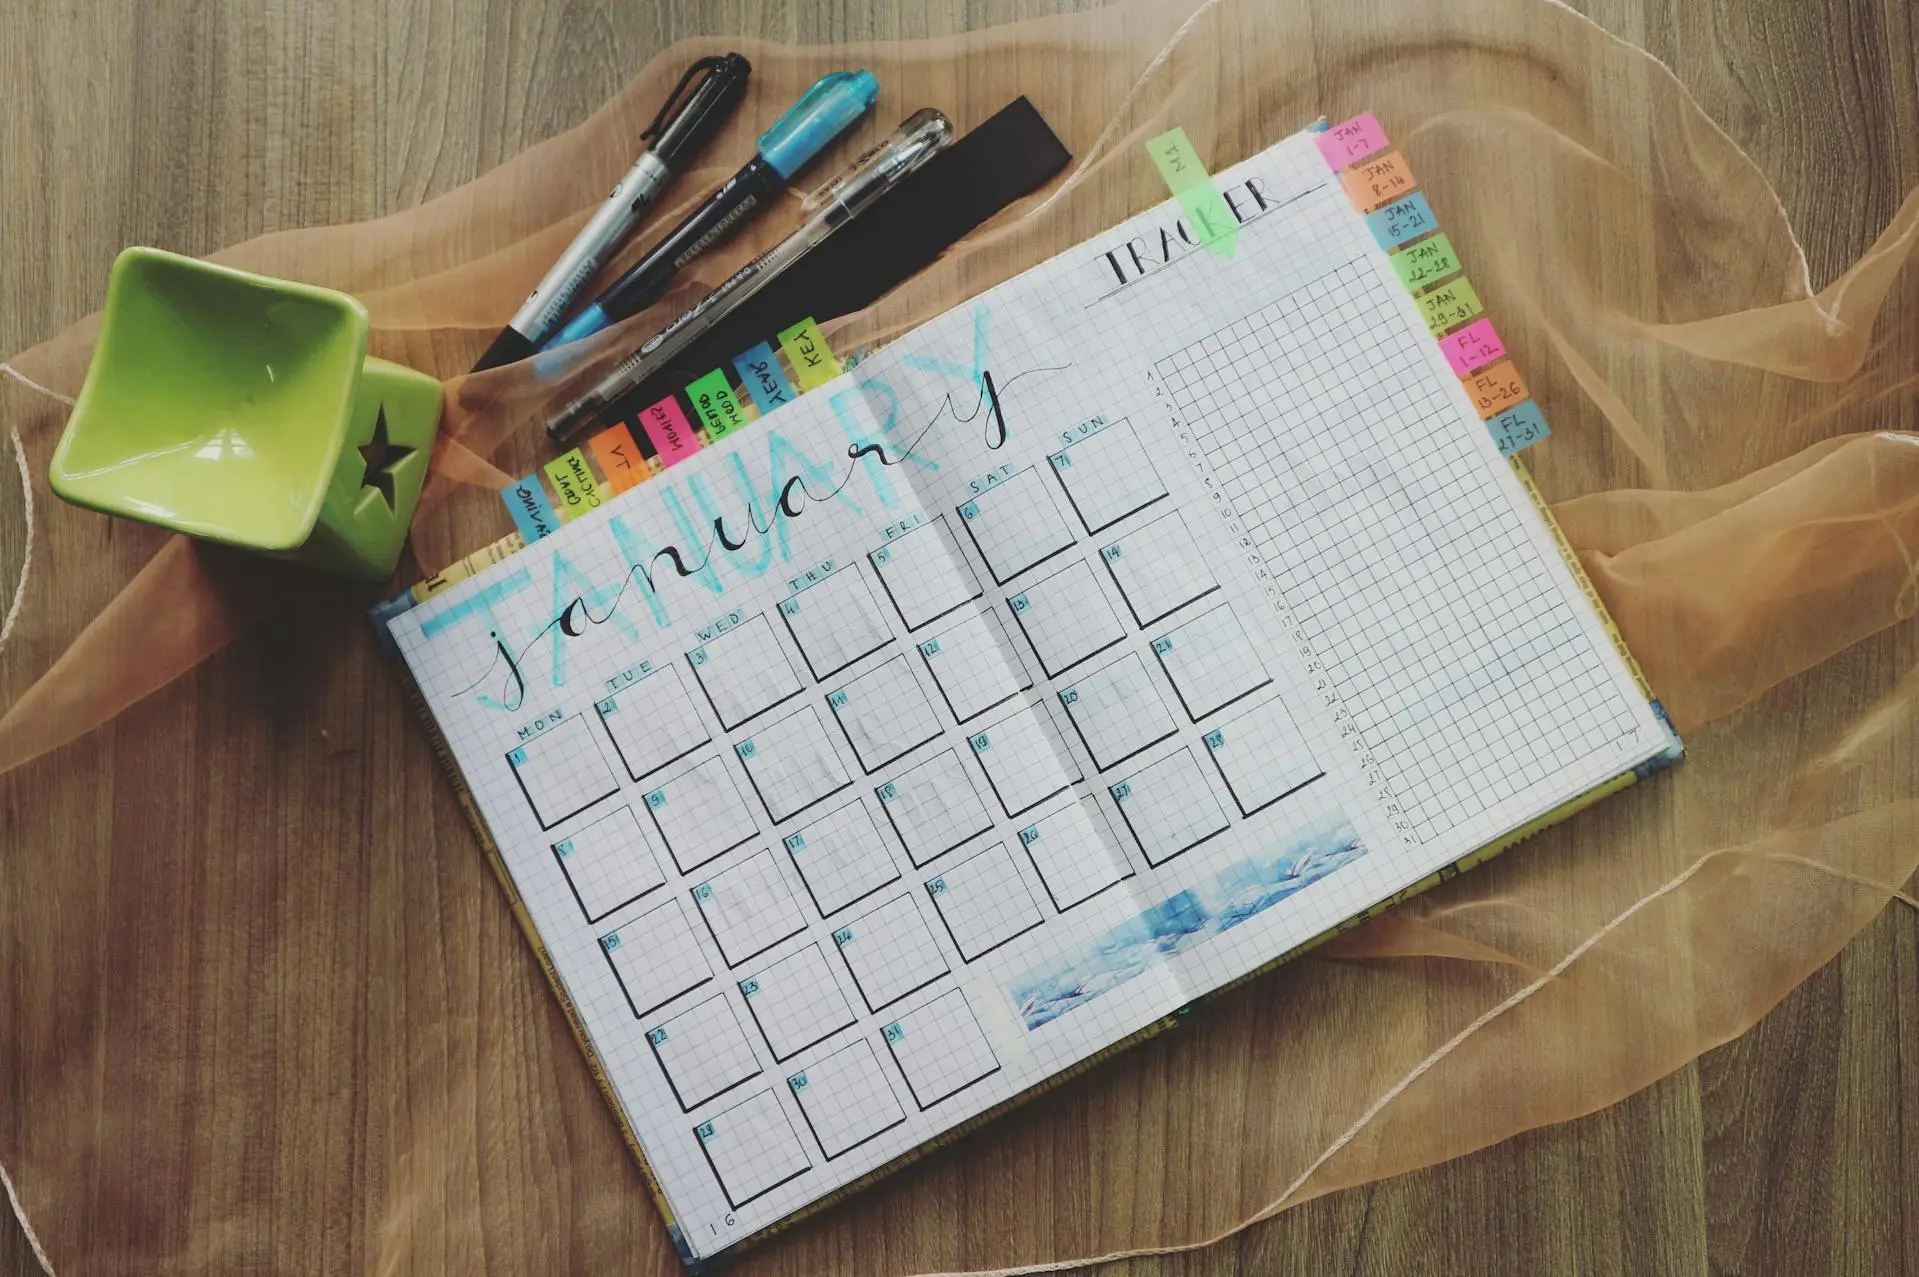 Calendar planner notebook open to January